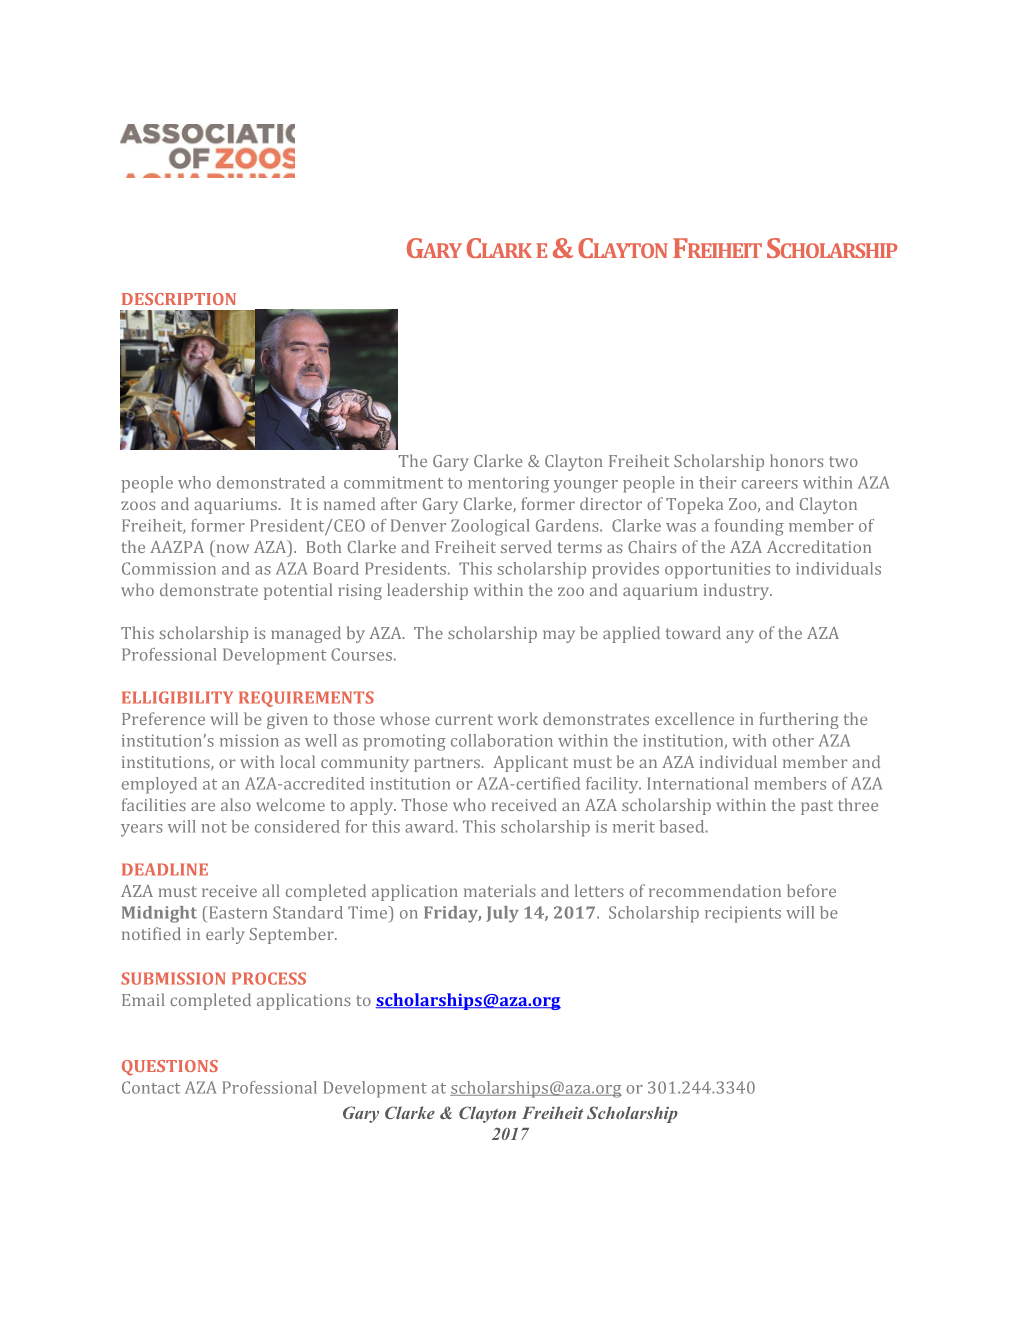 Gary Clark E & Clayton Freiheit Scholarship